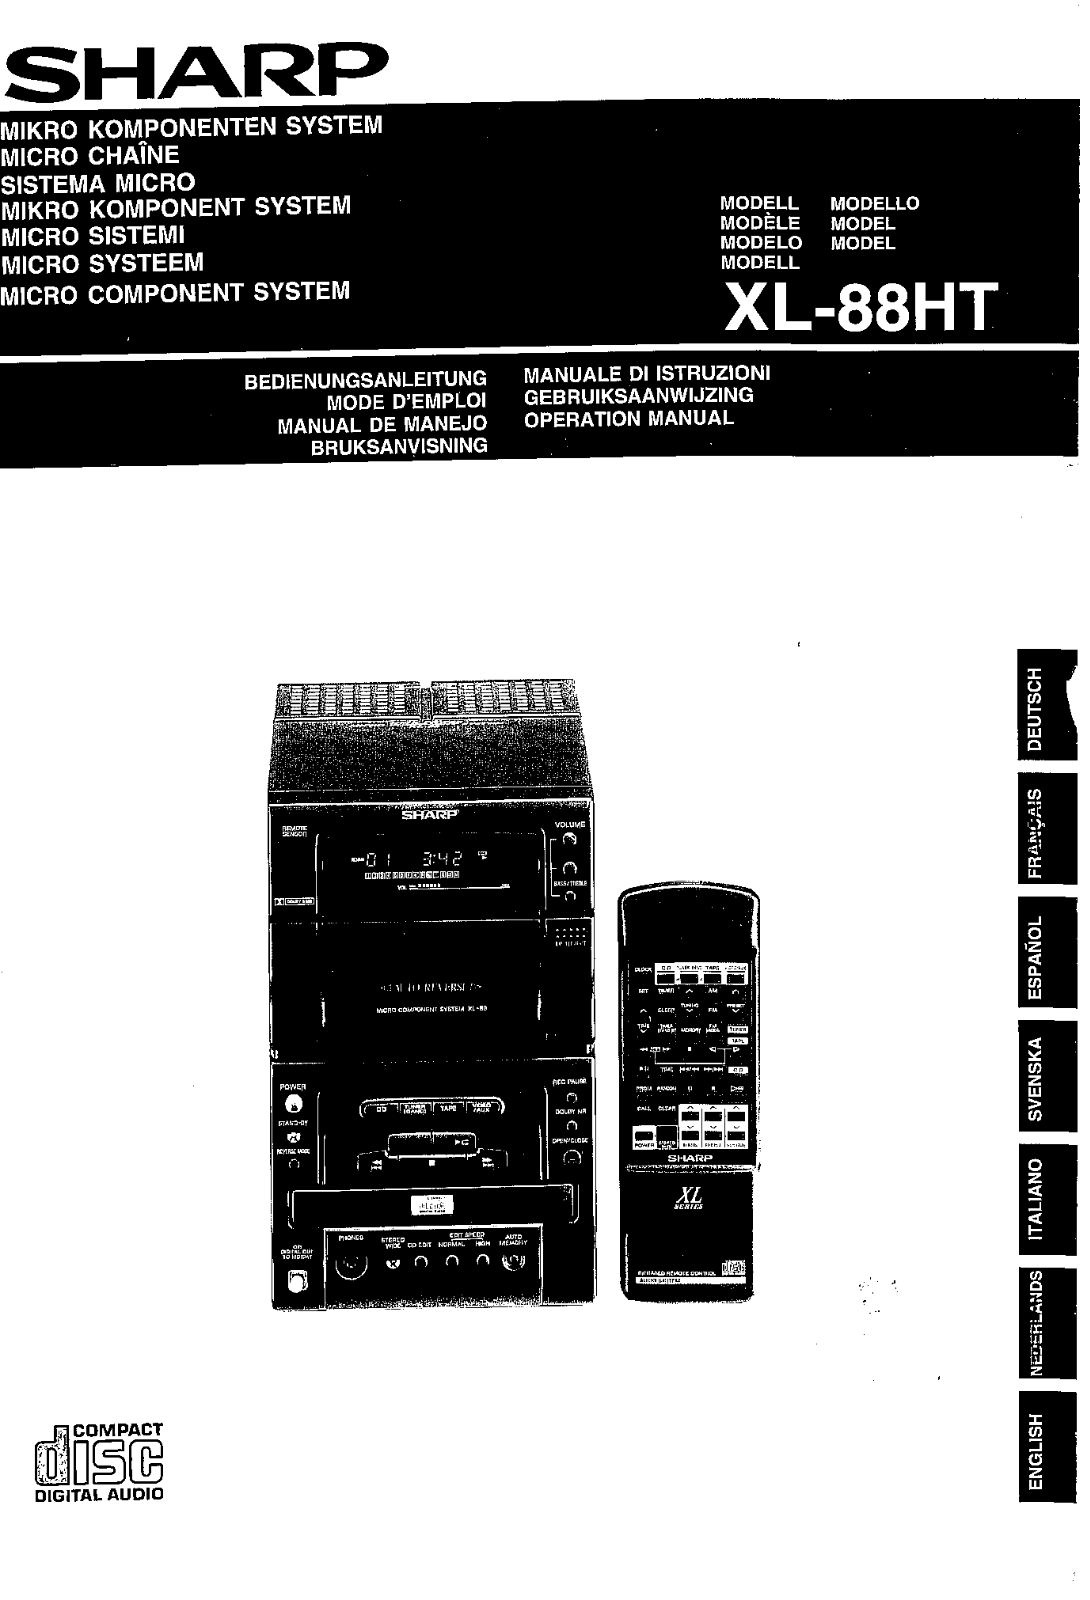 Sharp XL-88HT Manual